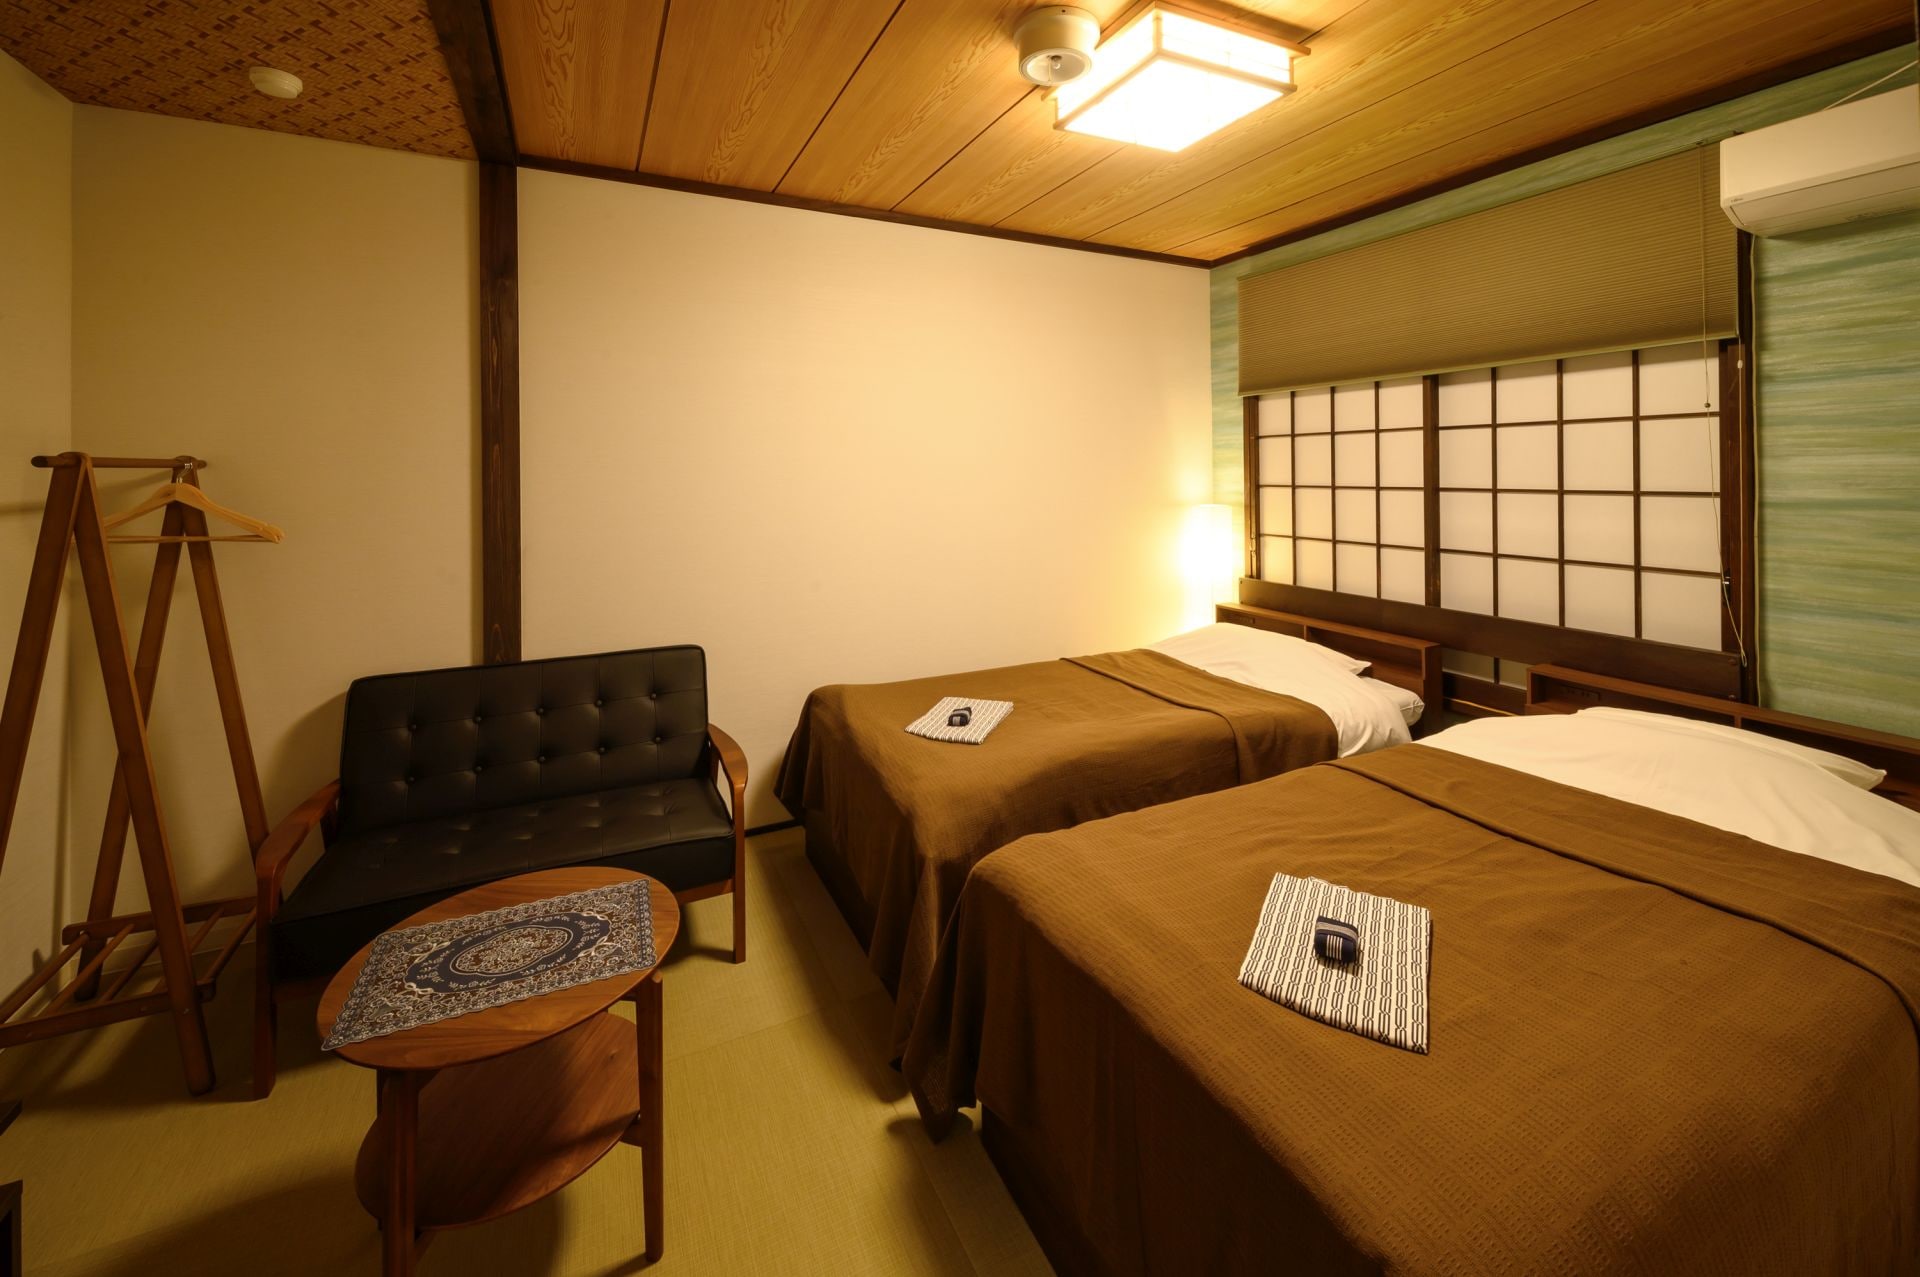 Twin room 10 tatami mats